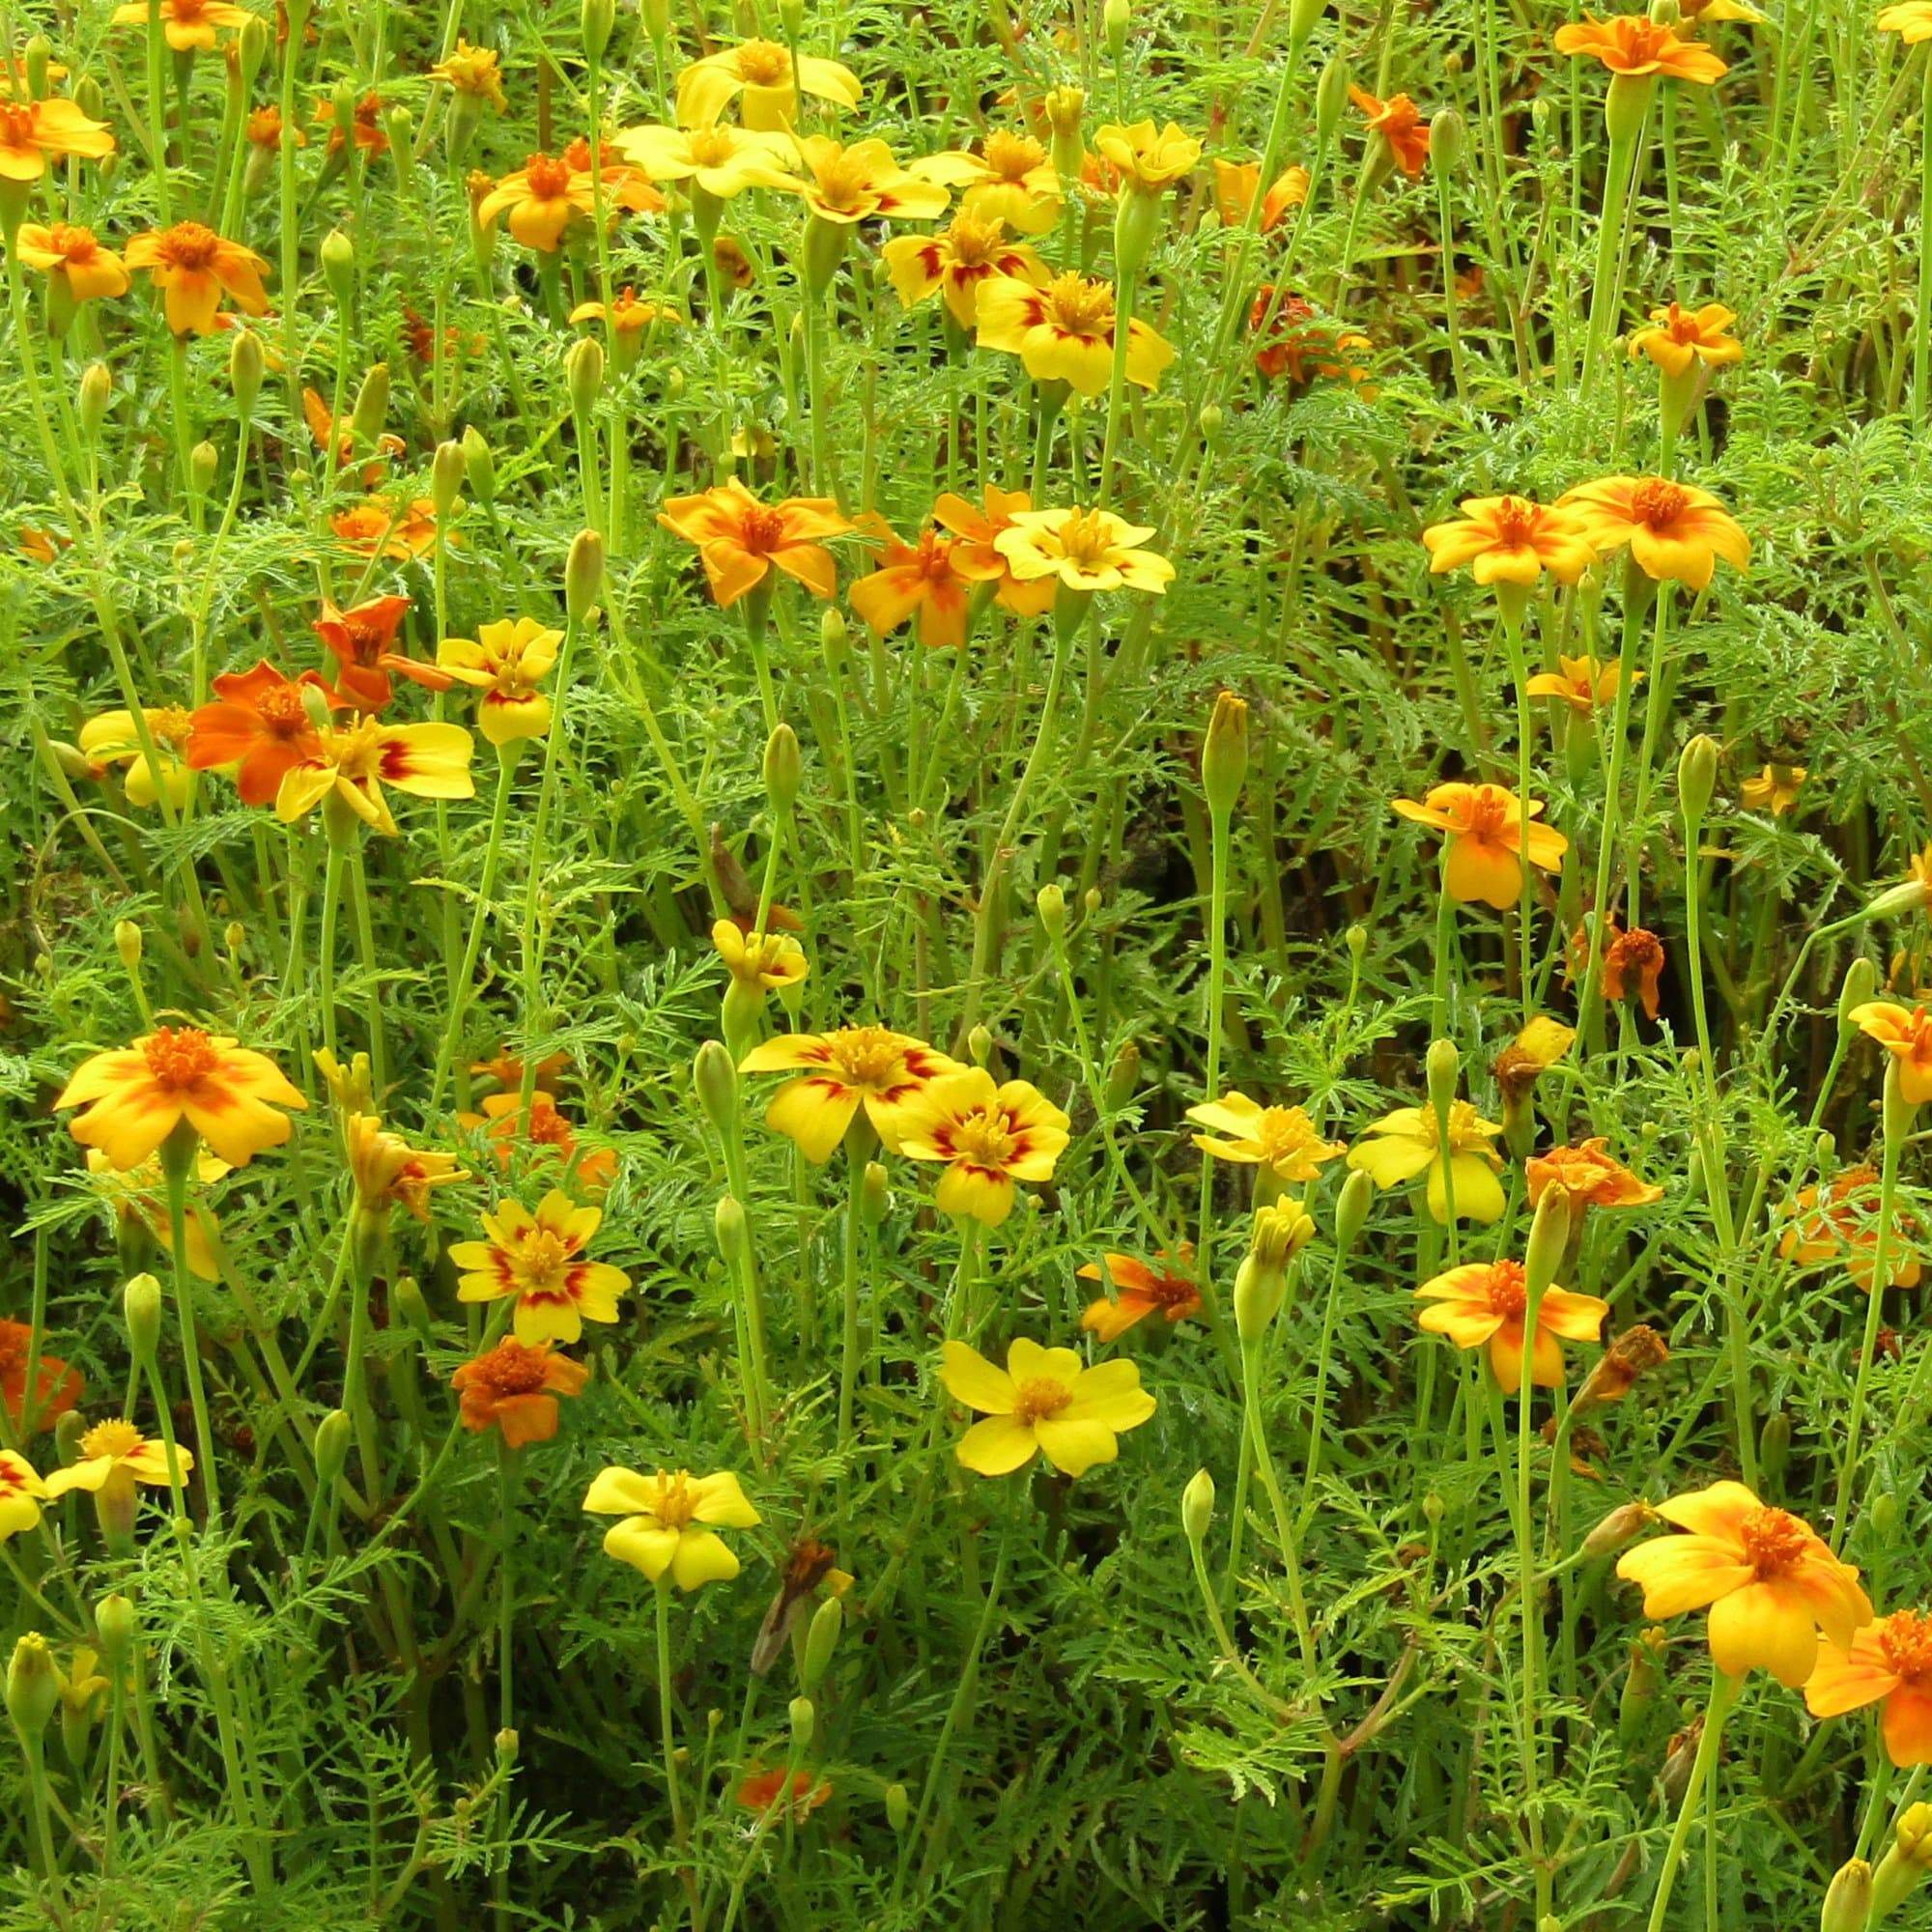 Image of marigolds blackberry companion plant